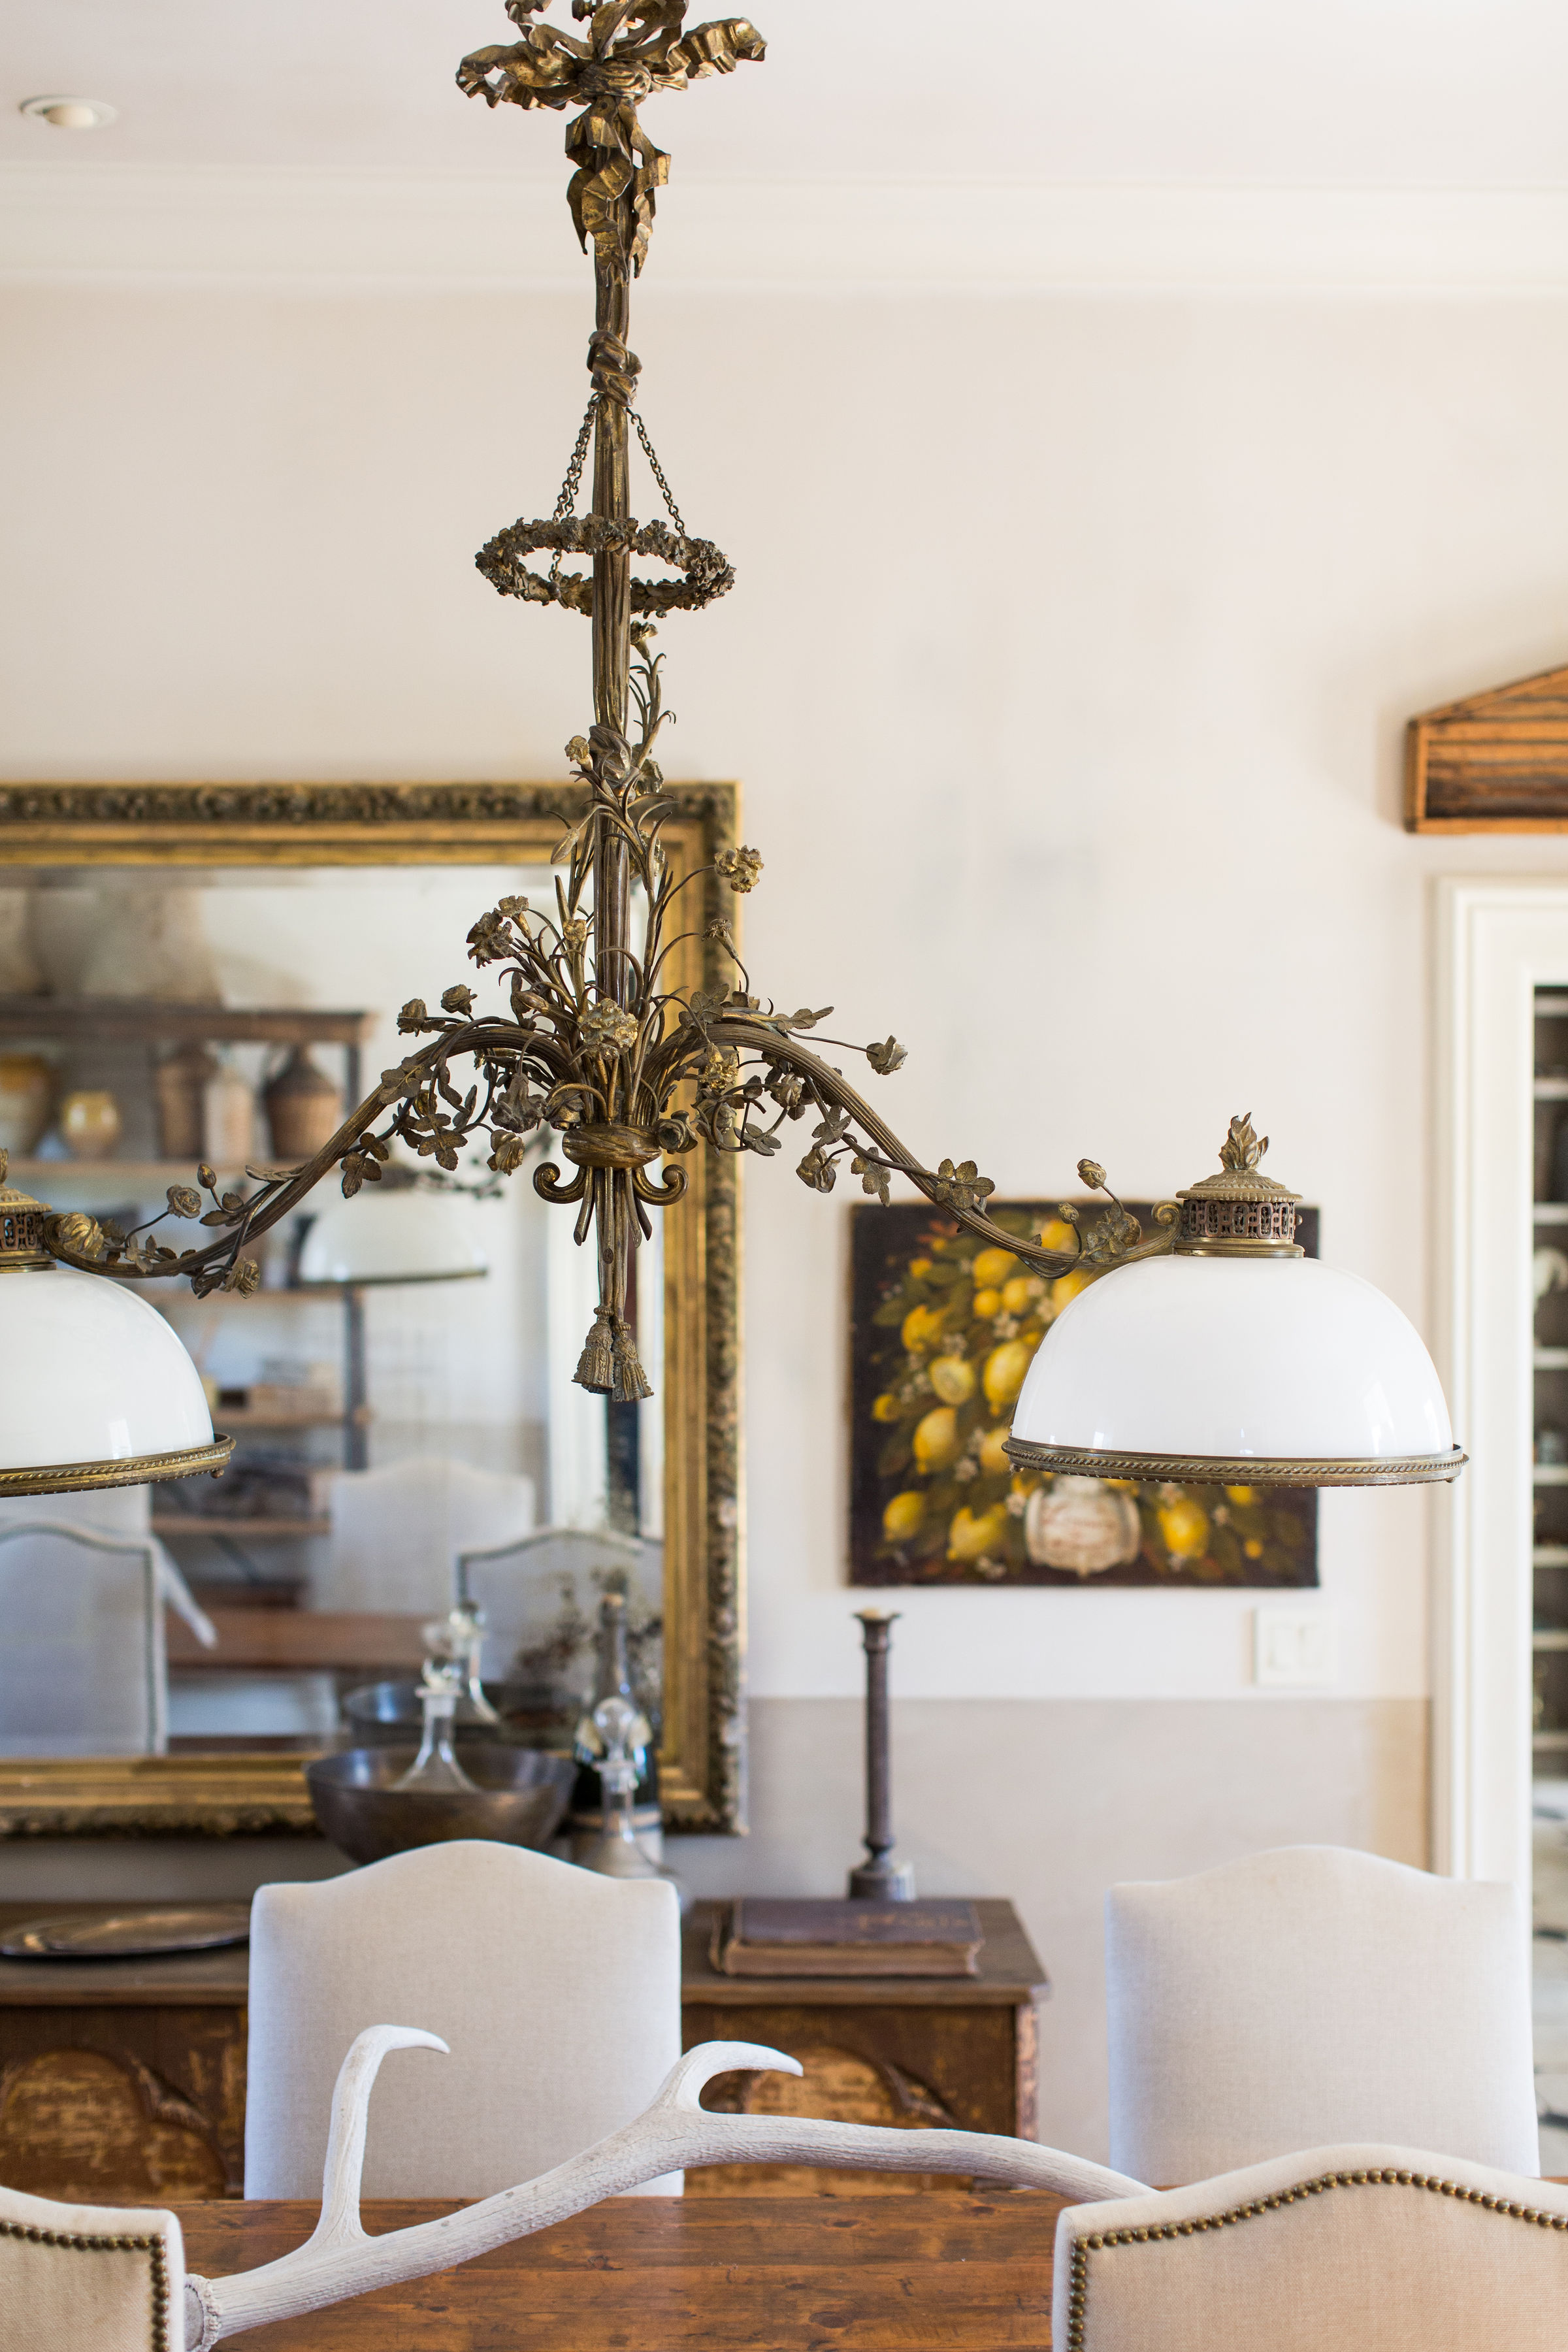 French vintage chandelier and objet d'art